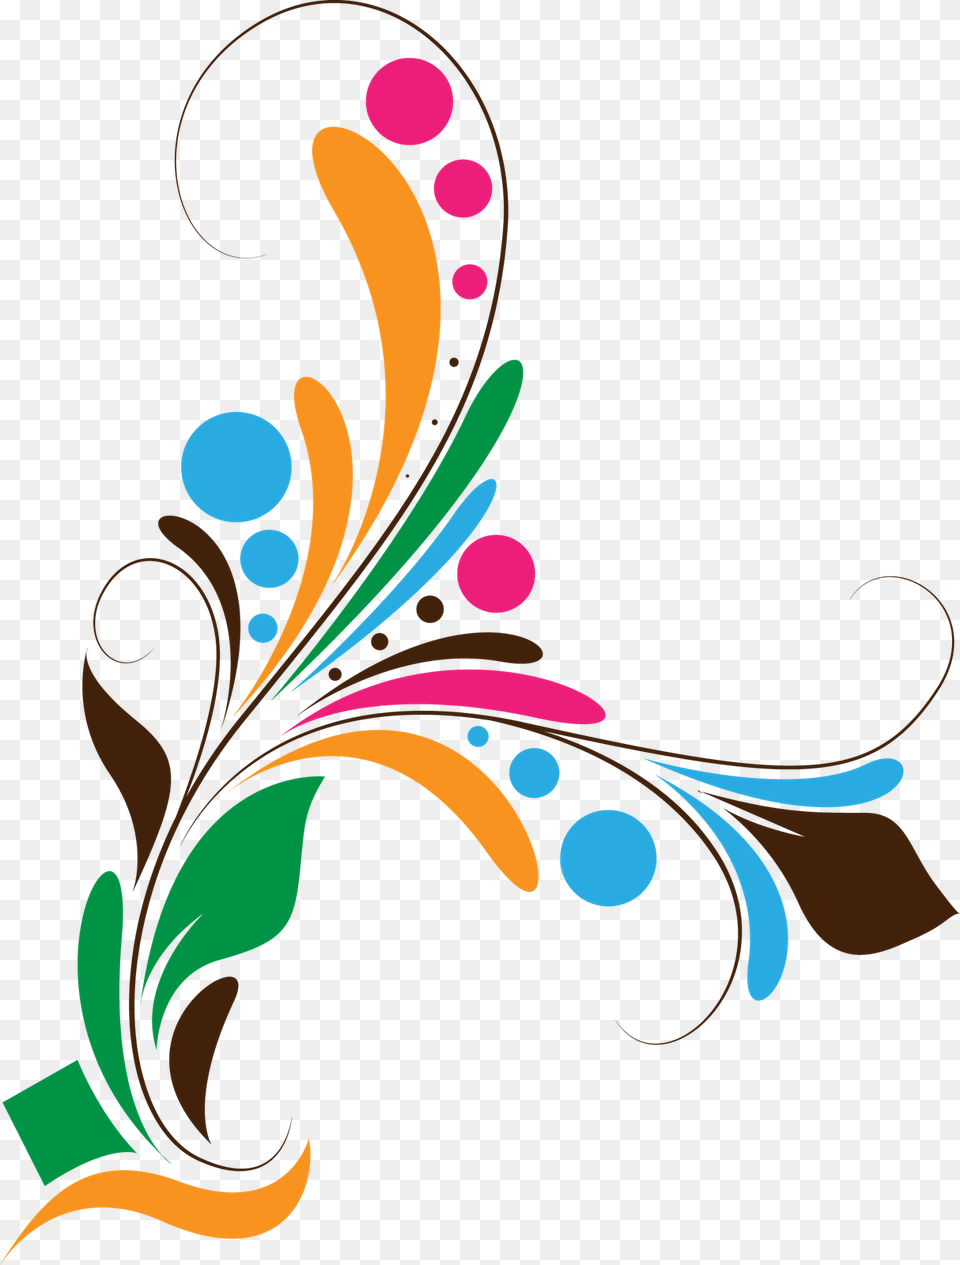 Corel Draw Flower Designs, Art, Floral Design, Graphics, Pattern Png Image